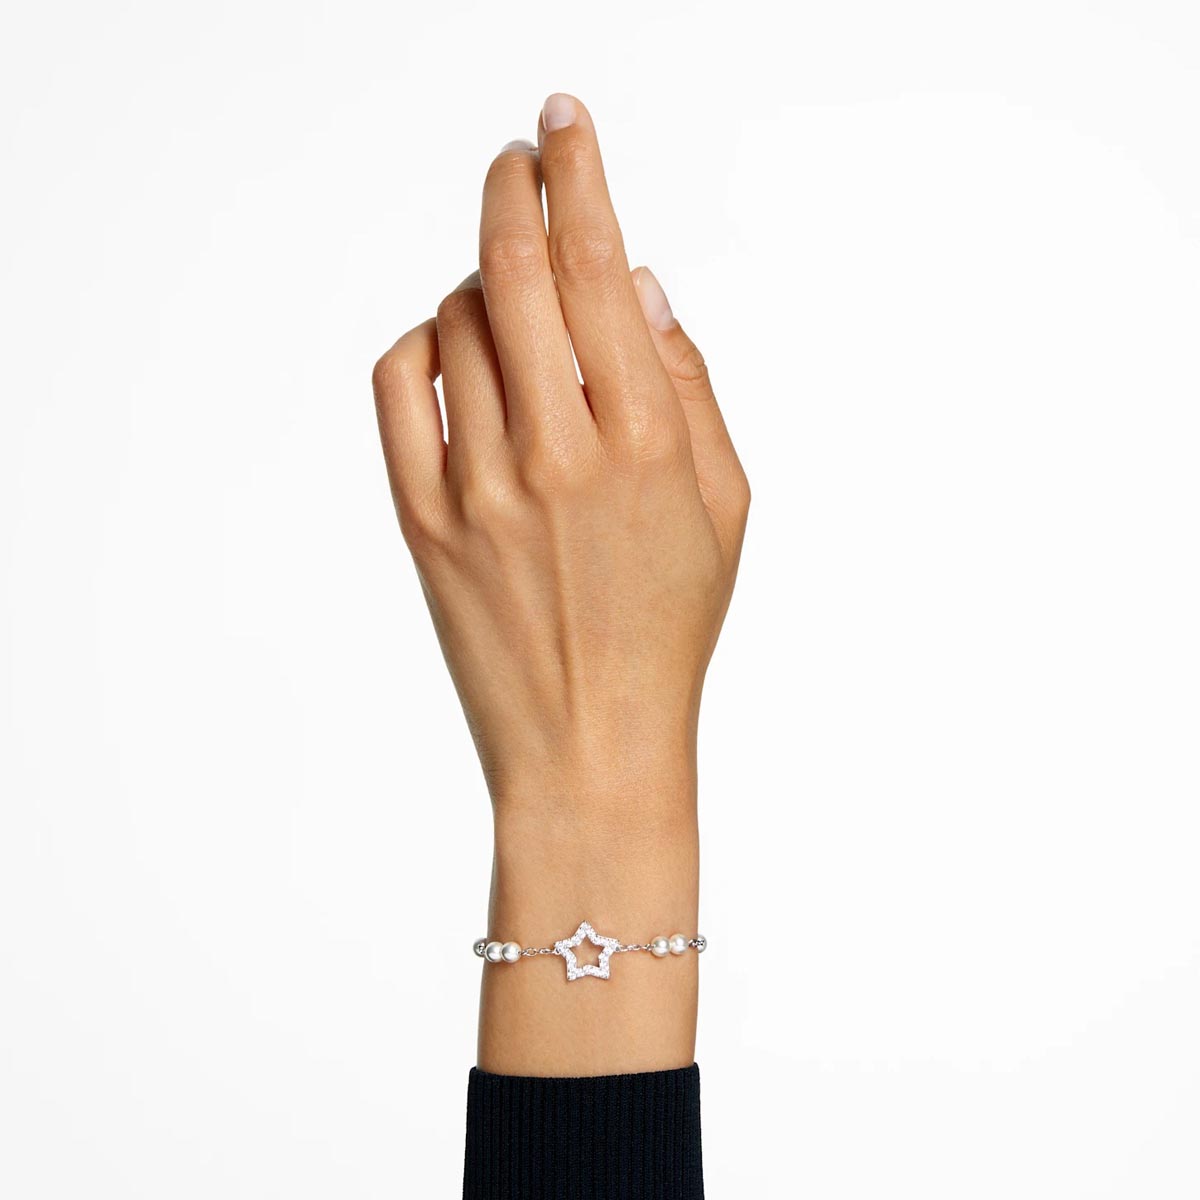 Silver Star Layer Bracelet, Jewelry | FatFace.com